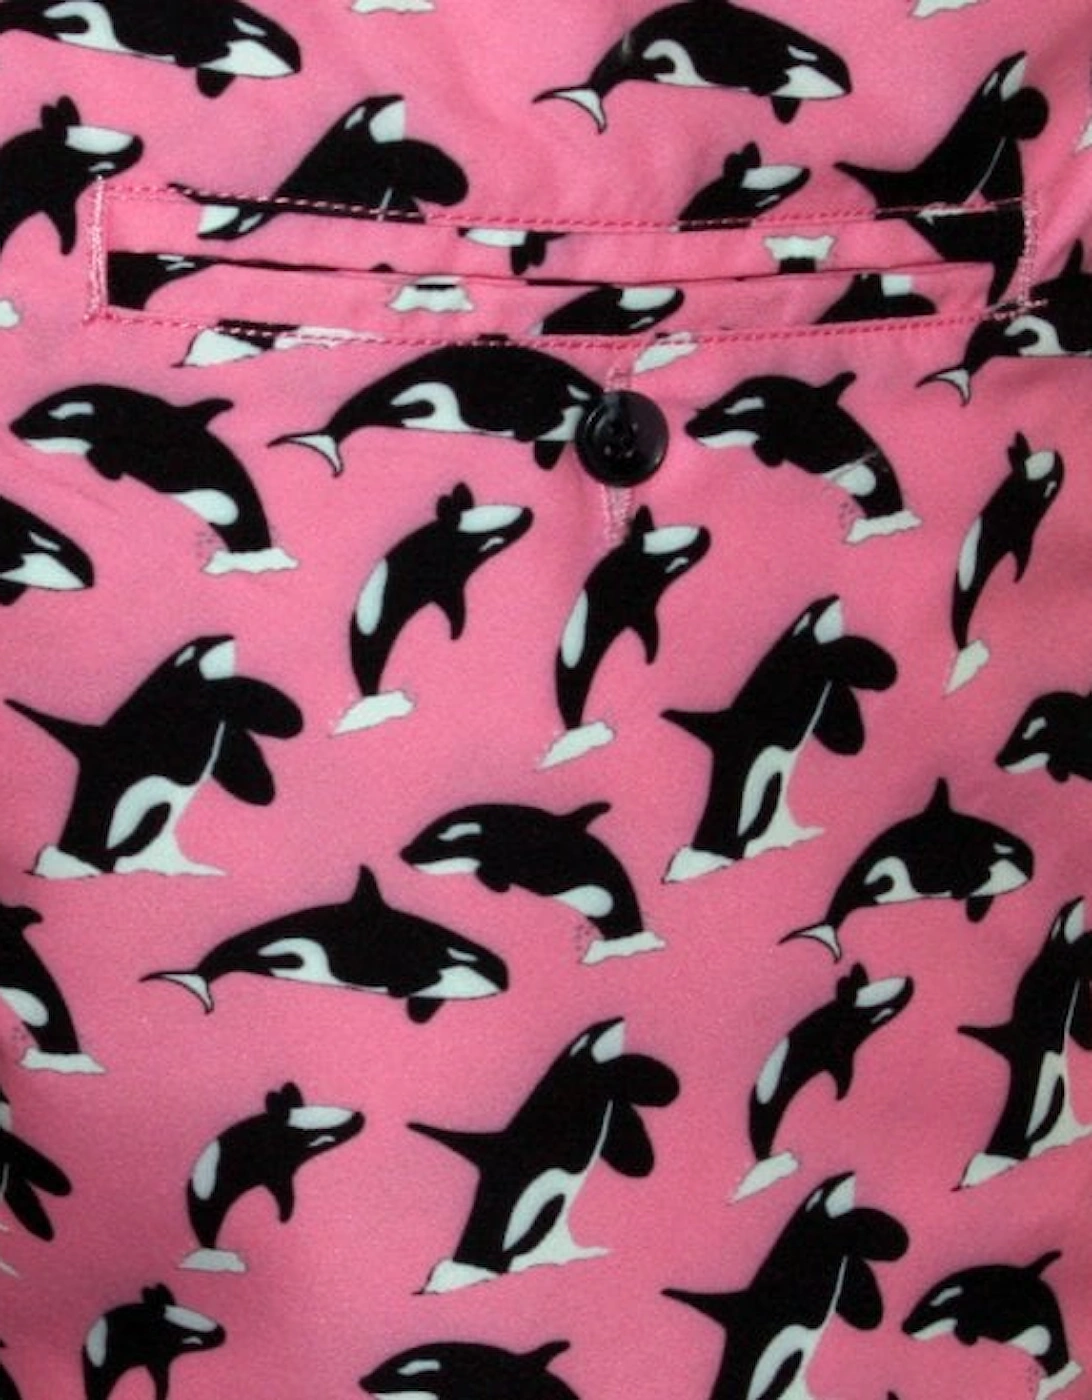 Killer Whales Swim Shorts, Pastel Pink